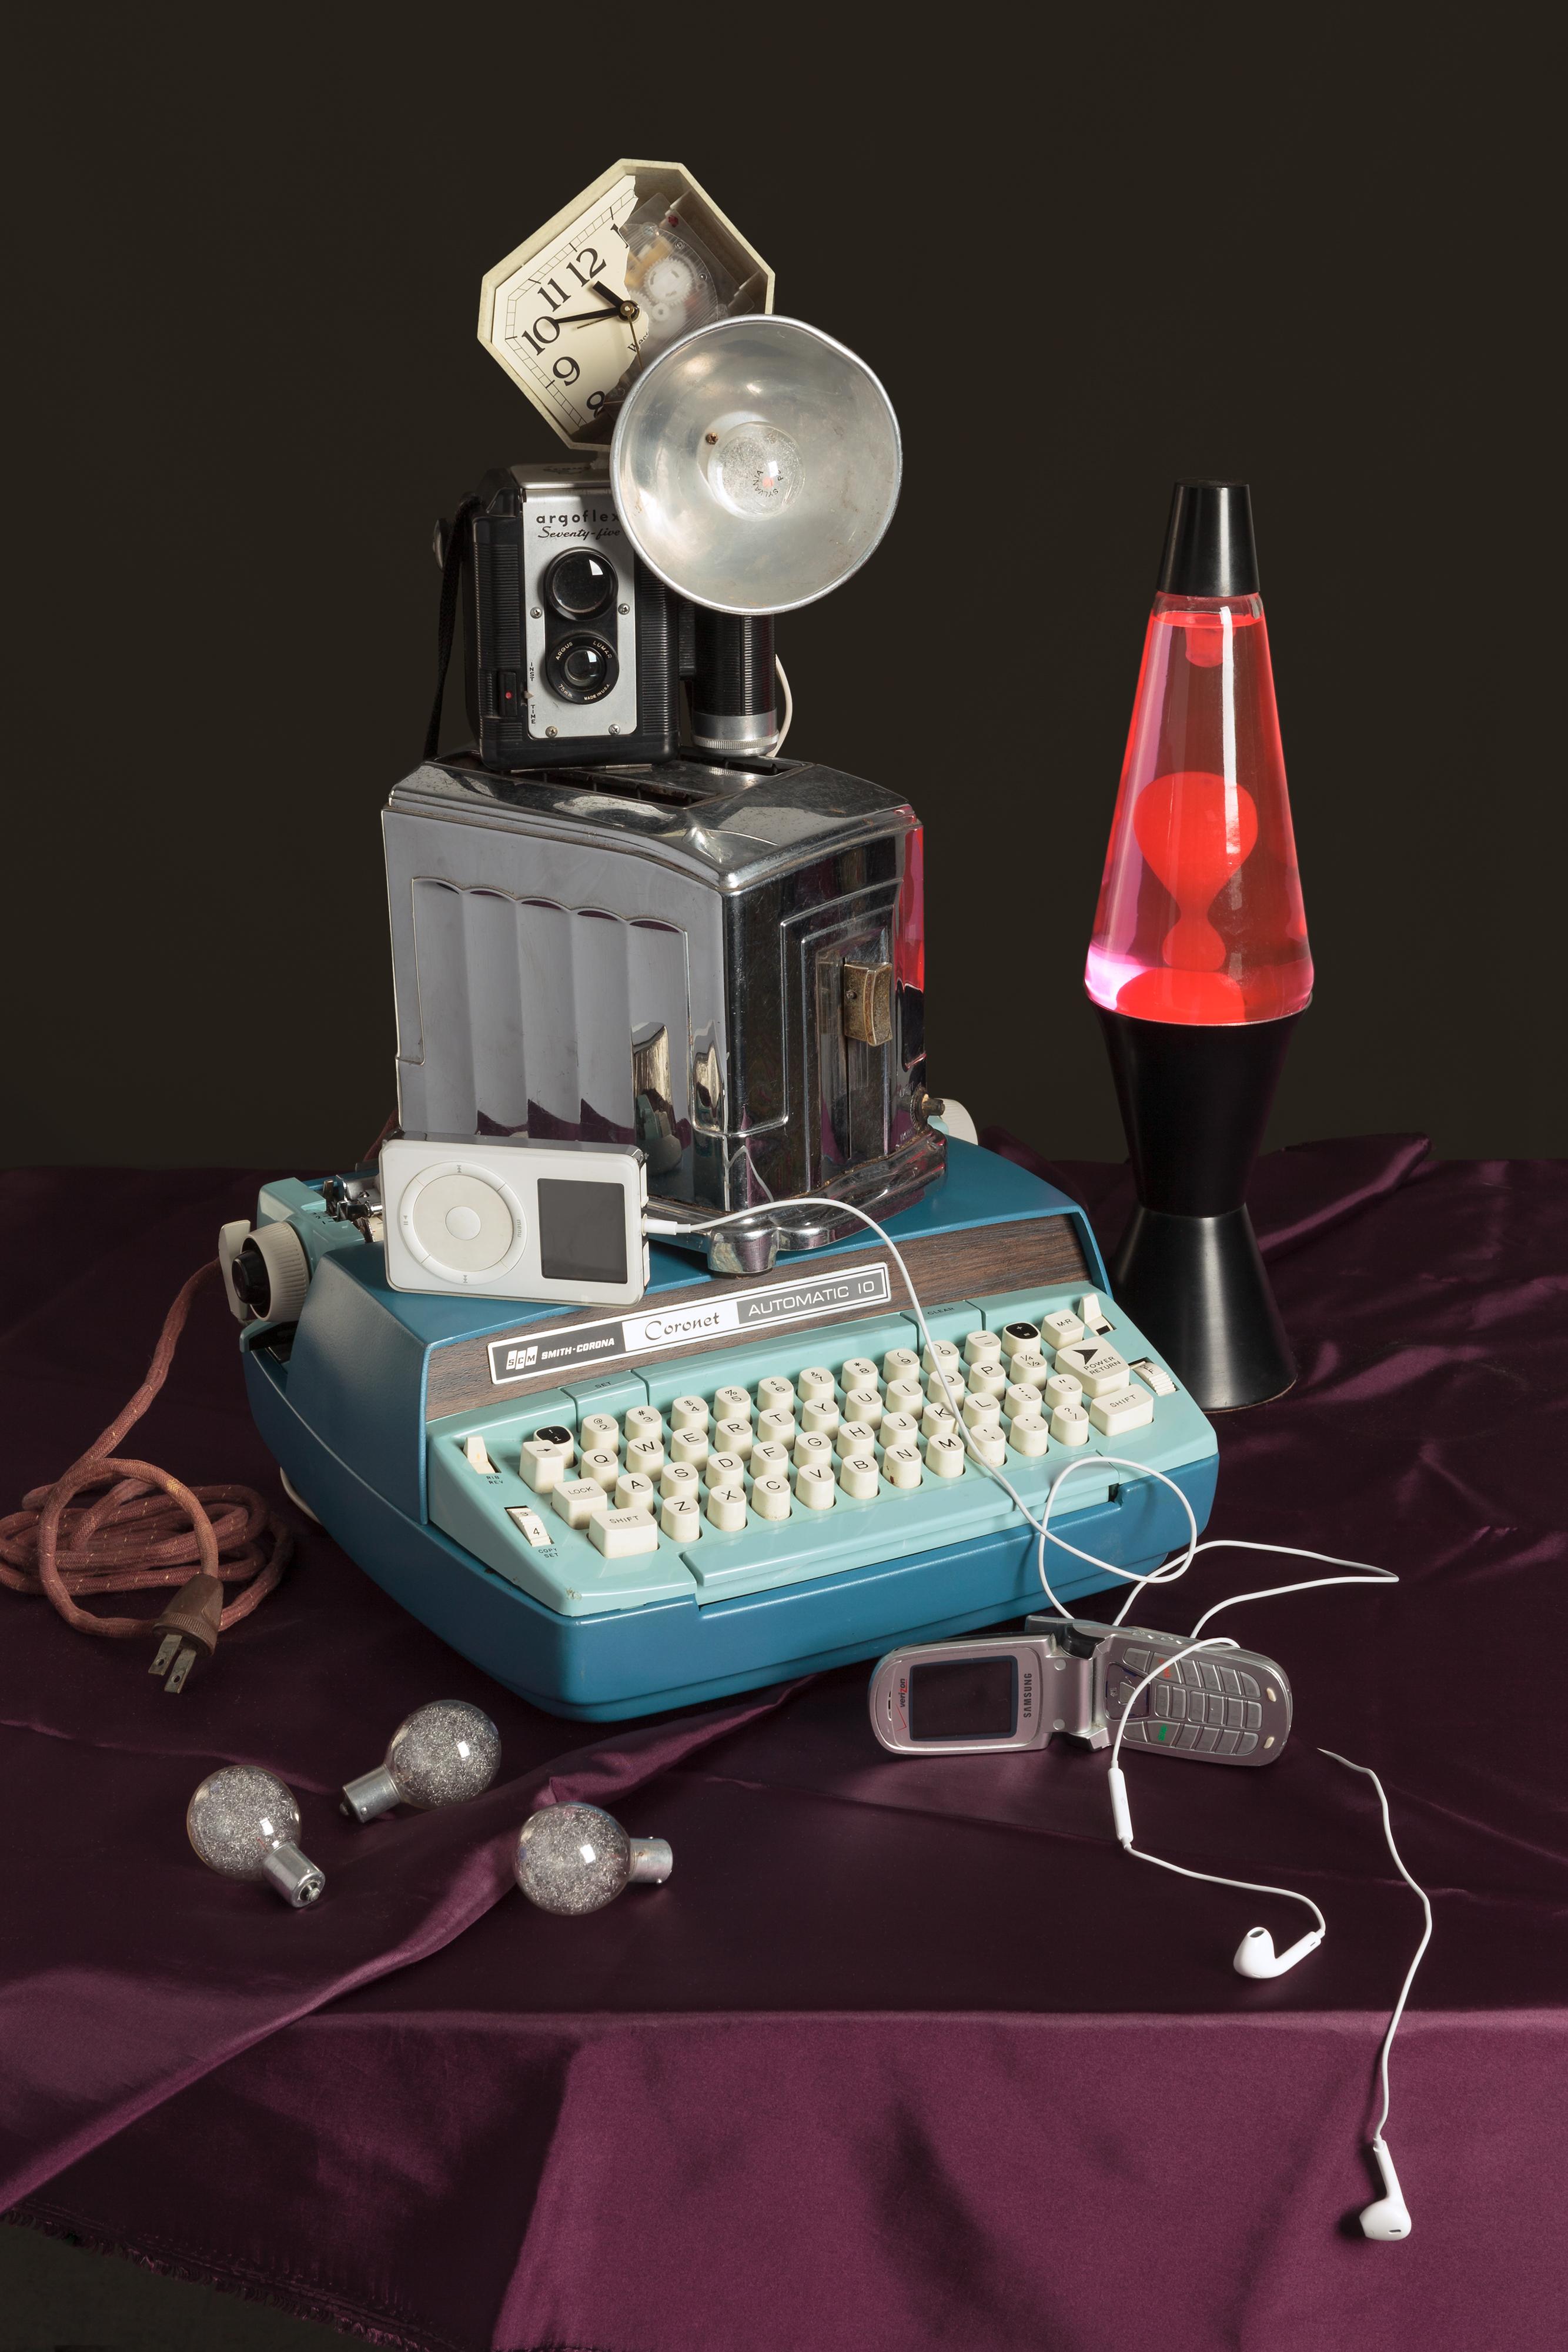 Jeanette May Still-Life Print - “Tech Vanitas: Blue Typewriter” Contemporary Still-life Photograph, Vintage Tech